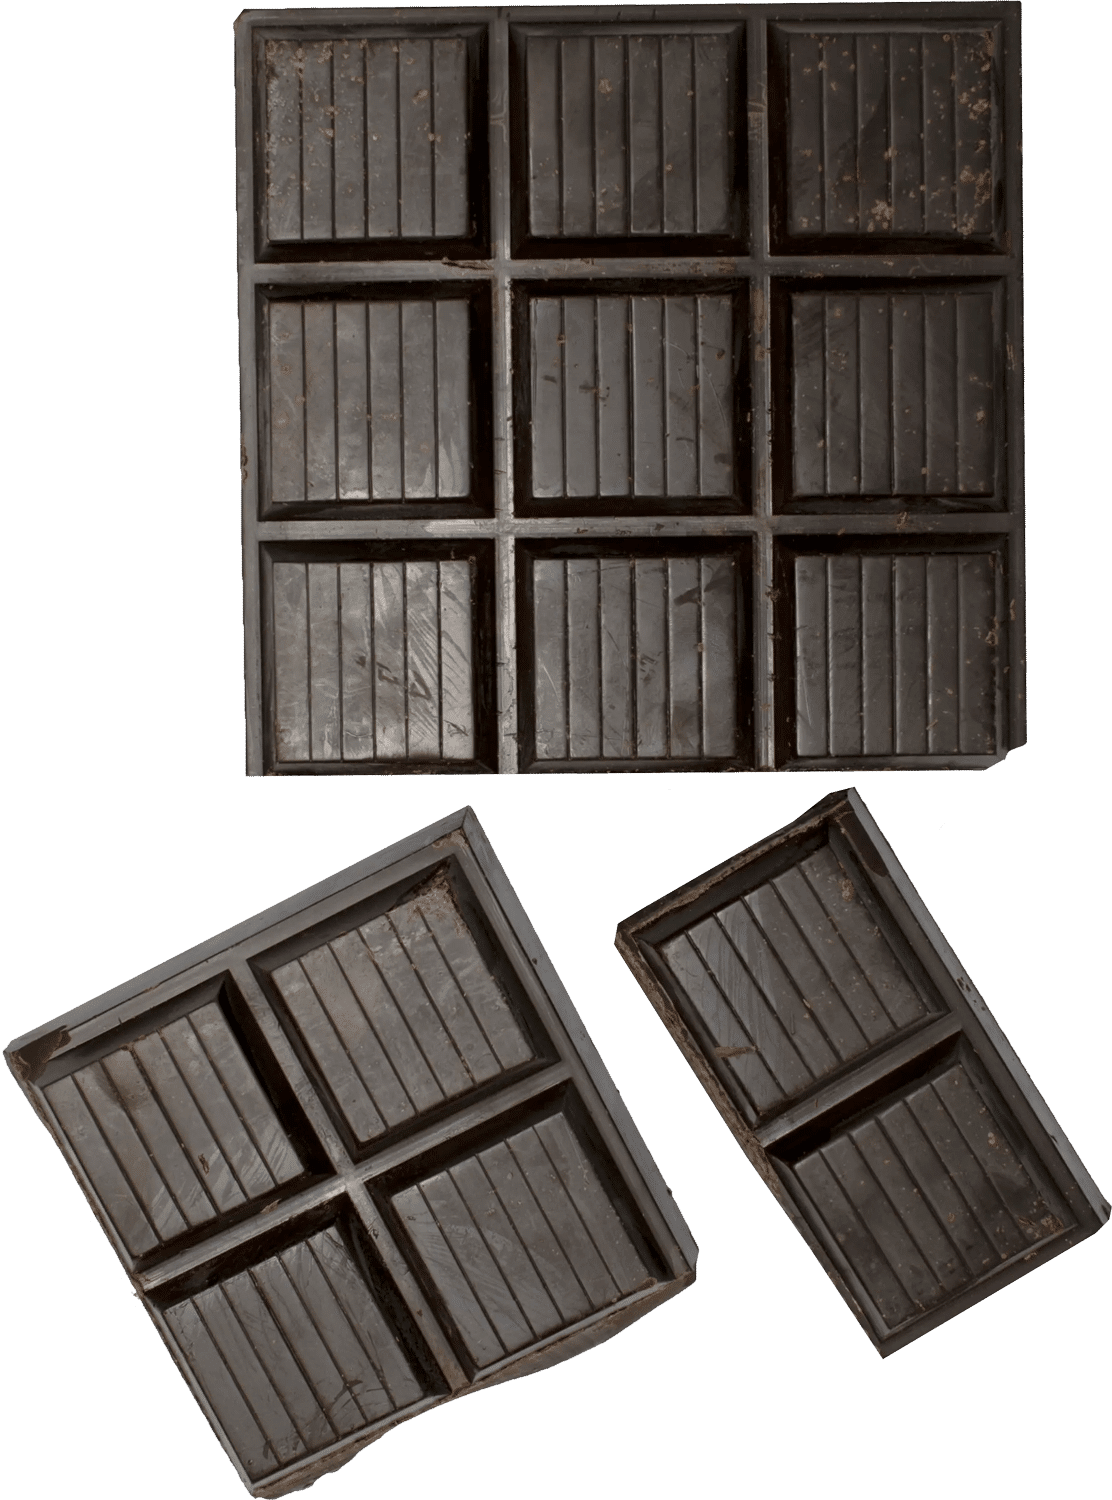 1 kilo 71% mørk chokolade